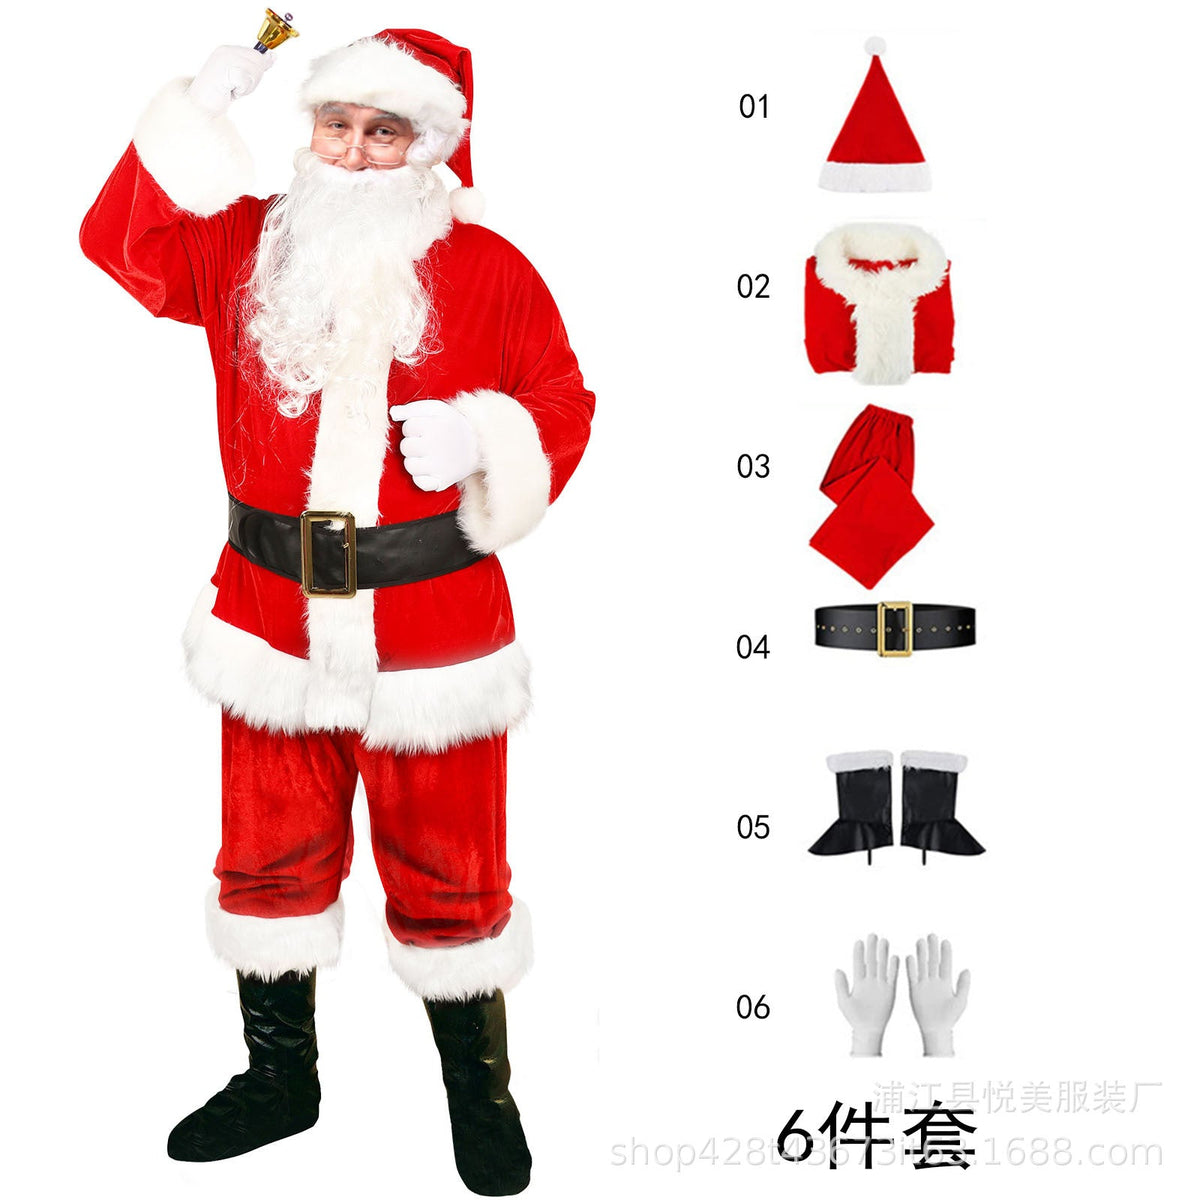 Santa Suit Costume Full Sets Outfit For Men